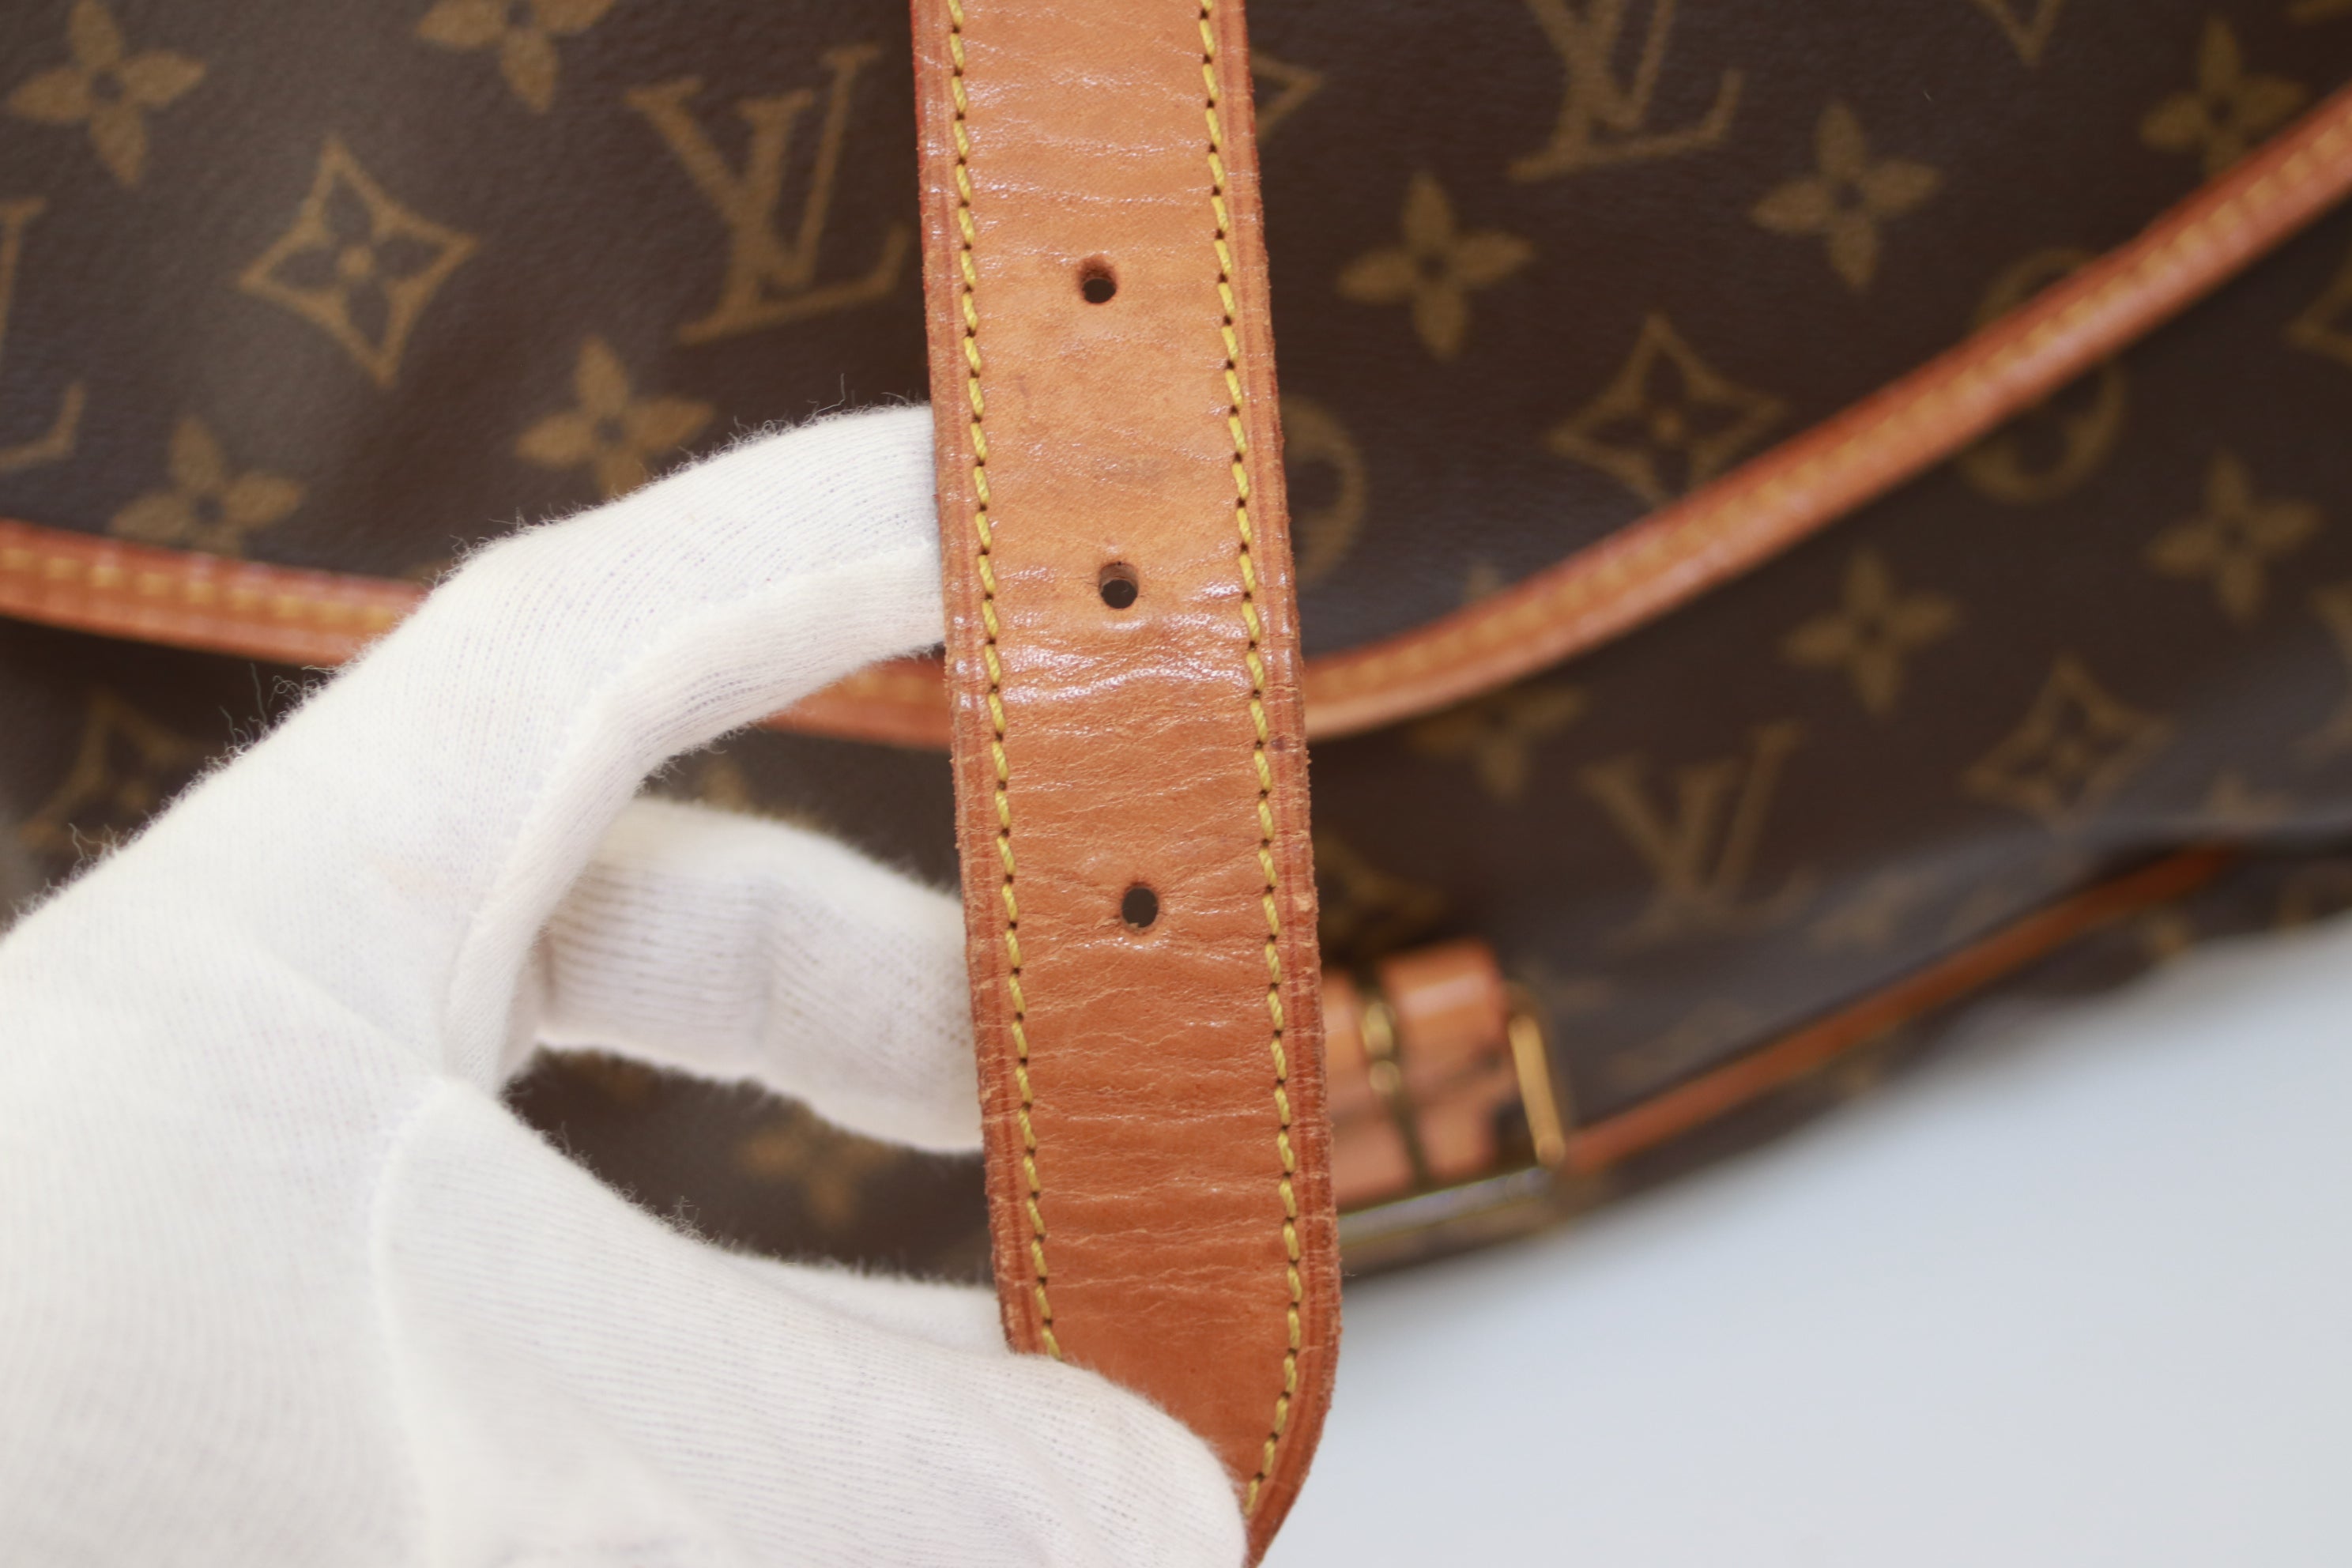 Louis Vuitton Saumur 35 Messenger Bag Used (7238)